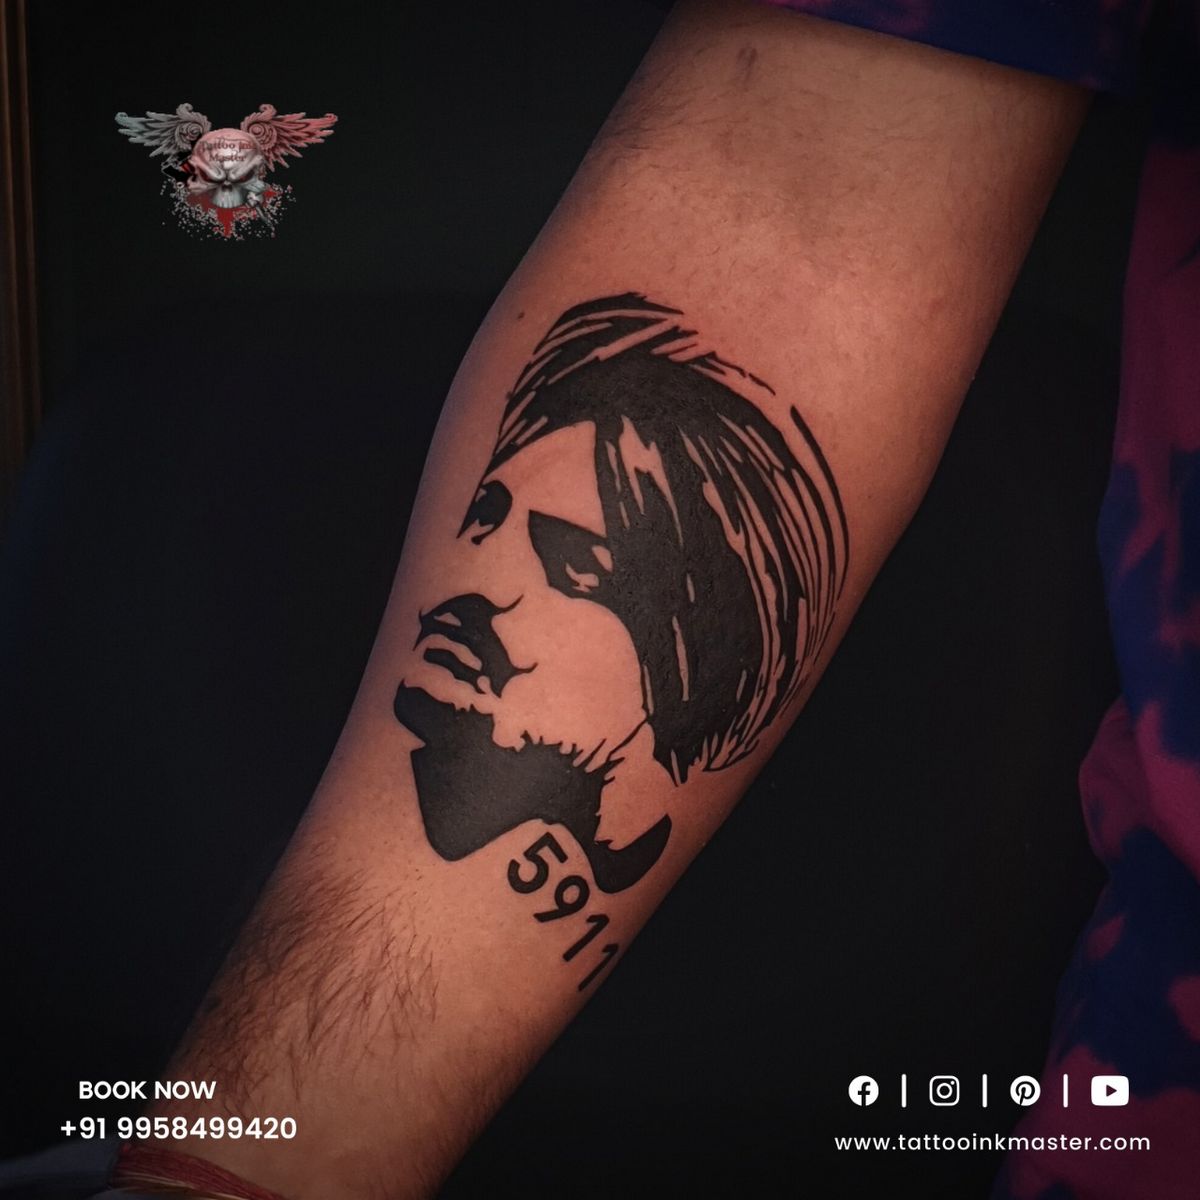 Karan Aujla tattoos on arm|shaheed Udham Singh| Latest video - YouTube